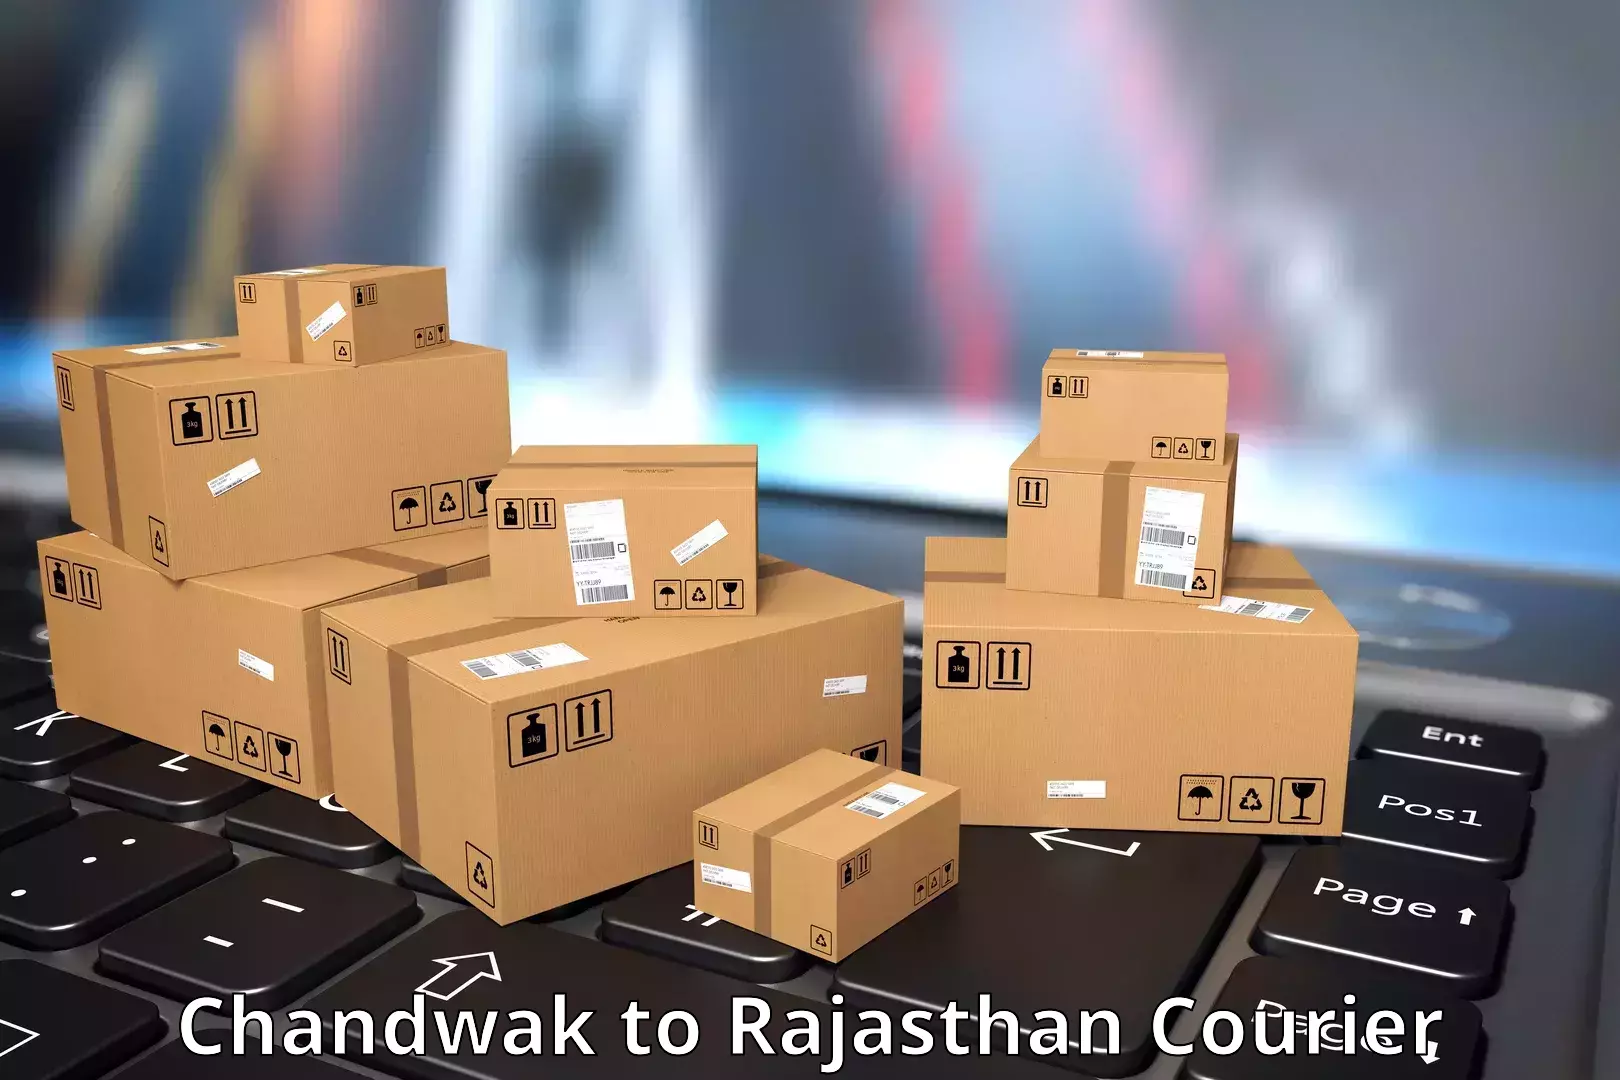 Courier service comparison in Chandwak to Gotan